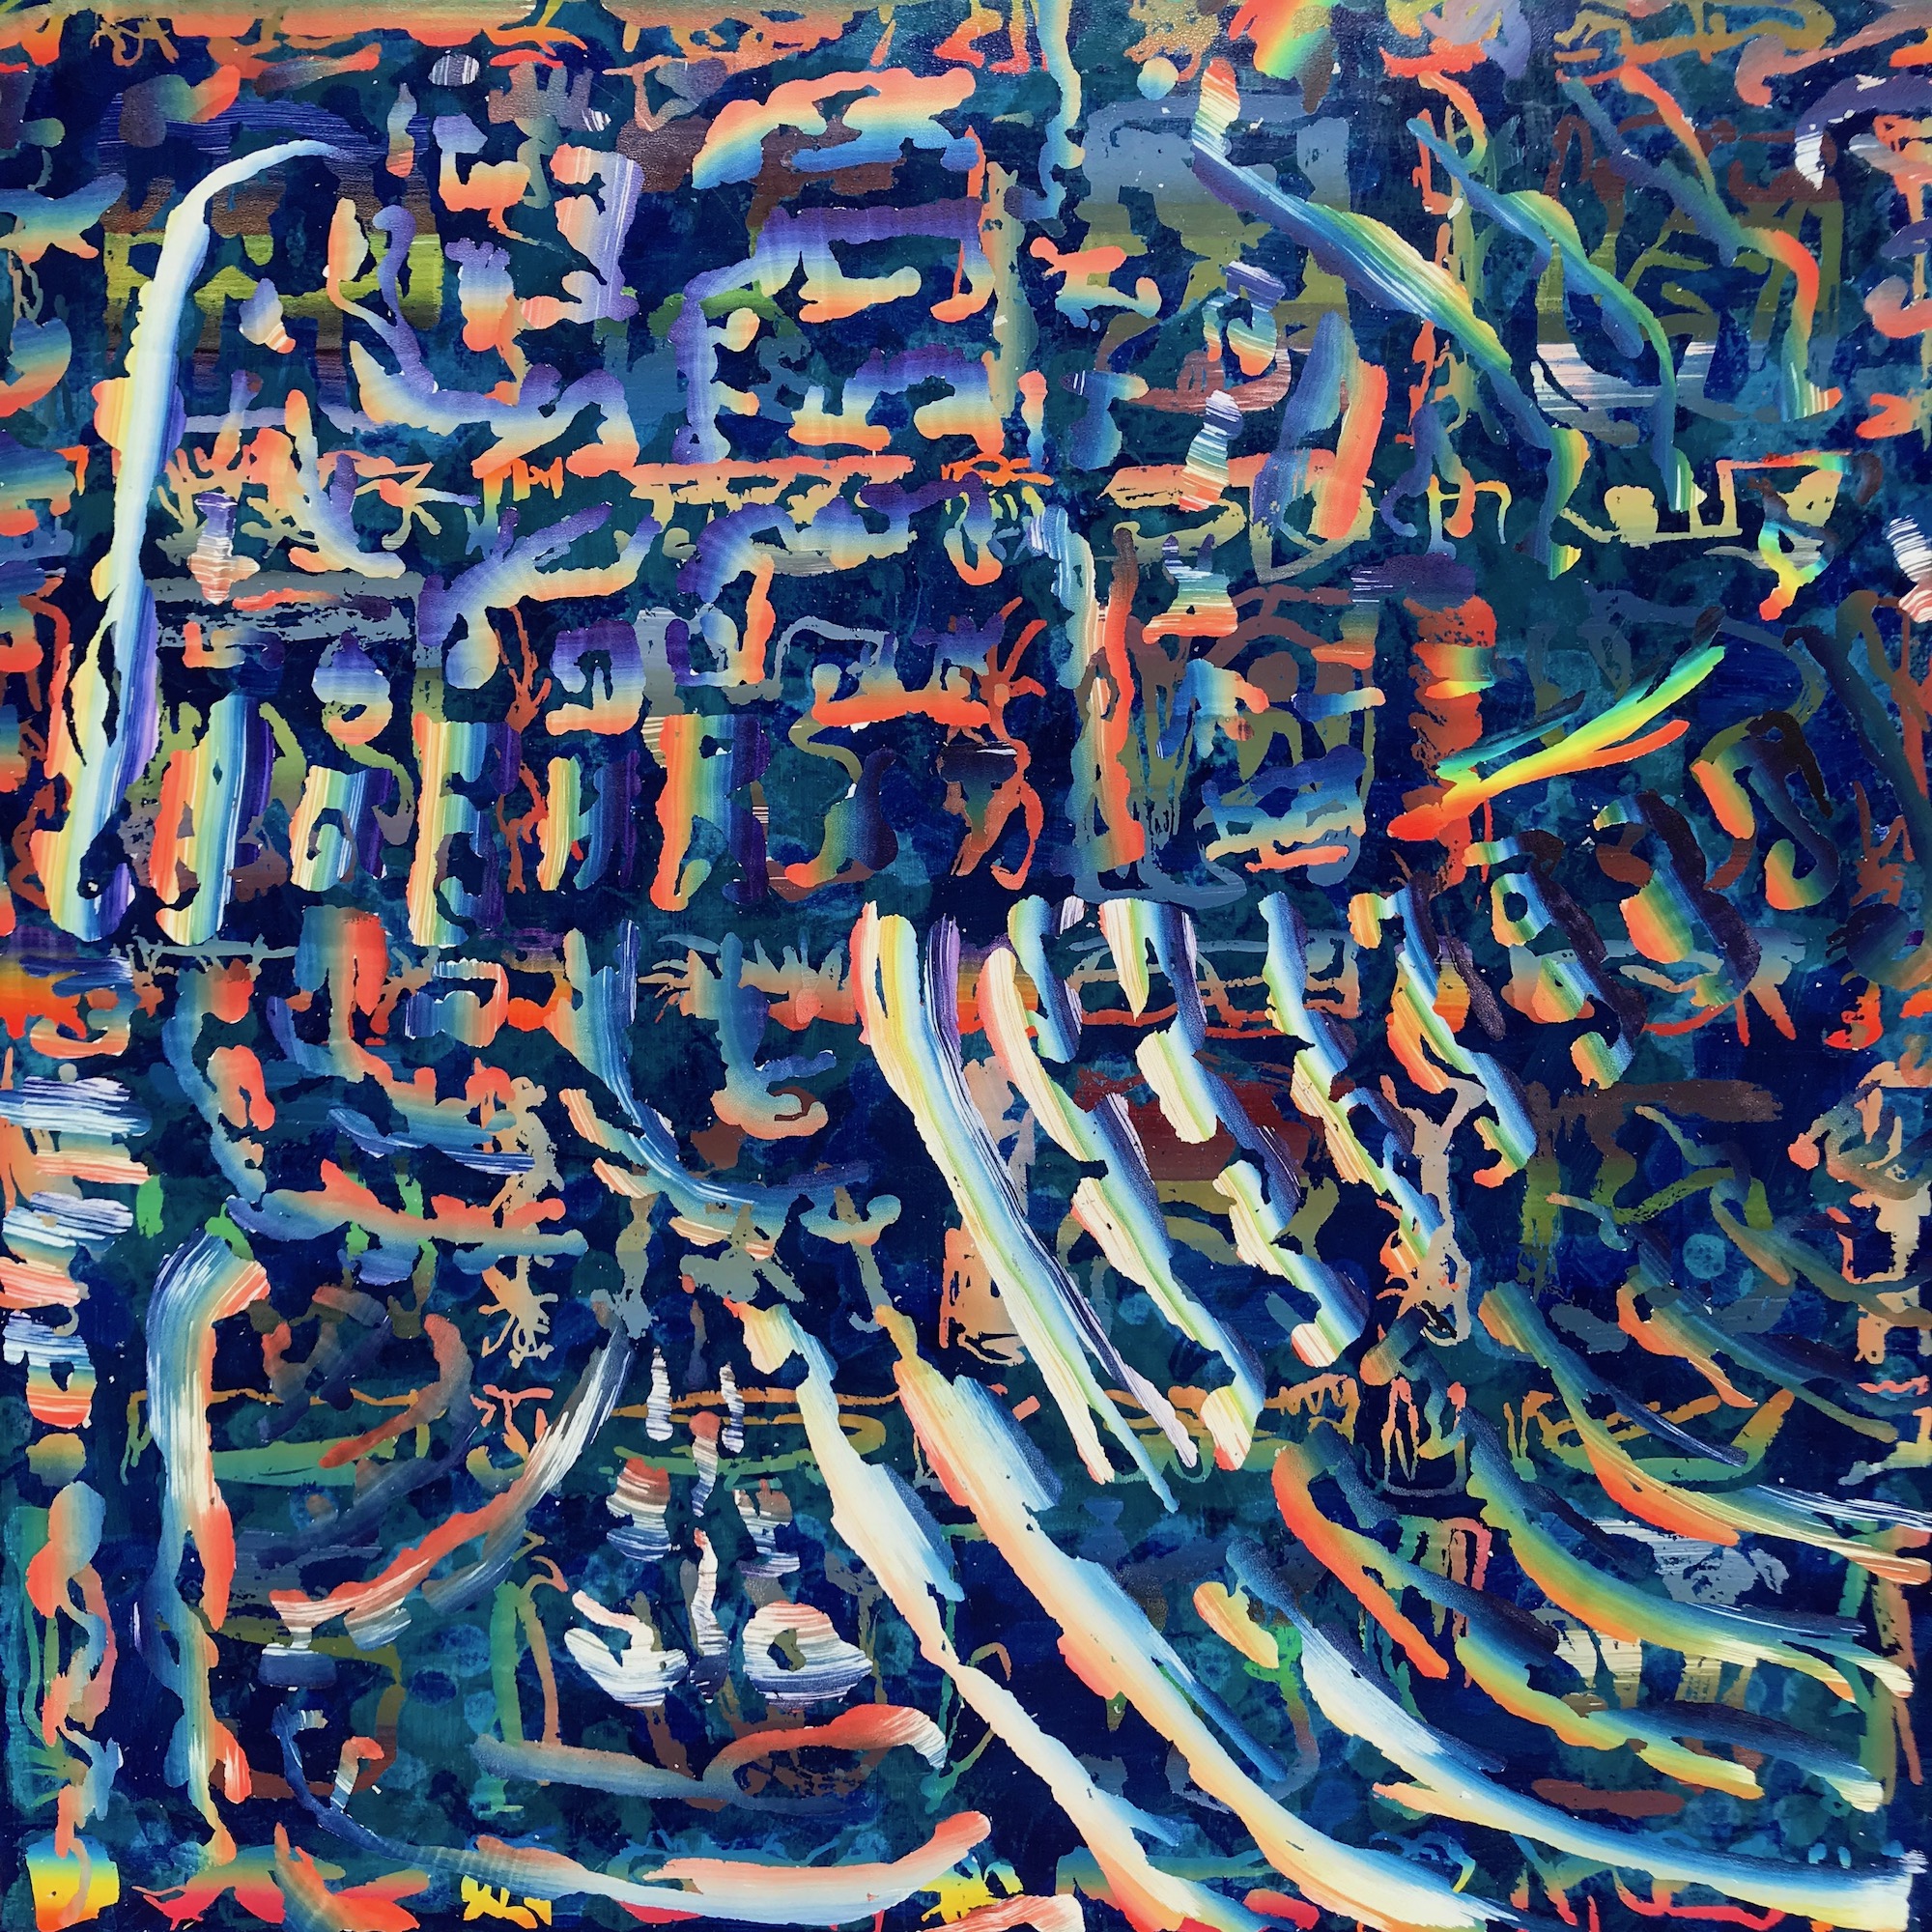   Untitled   2018  30" x 30"  Acrylic on panel 